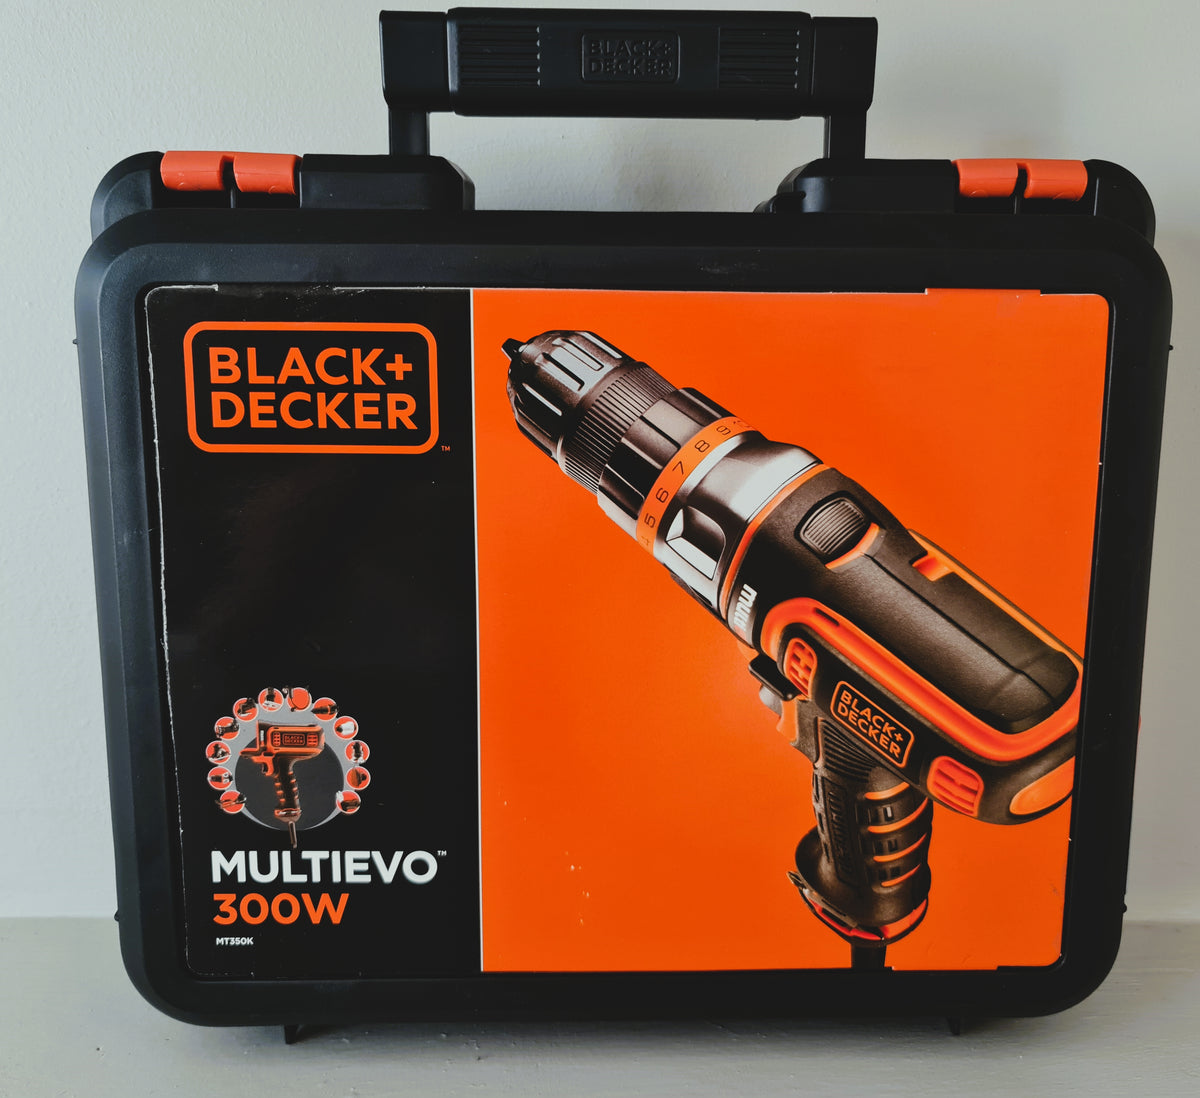 BLACK+DECKER™ Multievo™ multi-tool - more heads are better than 1